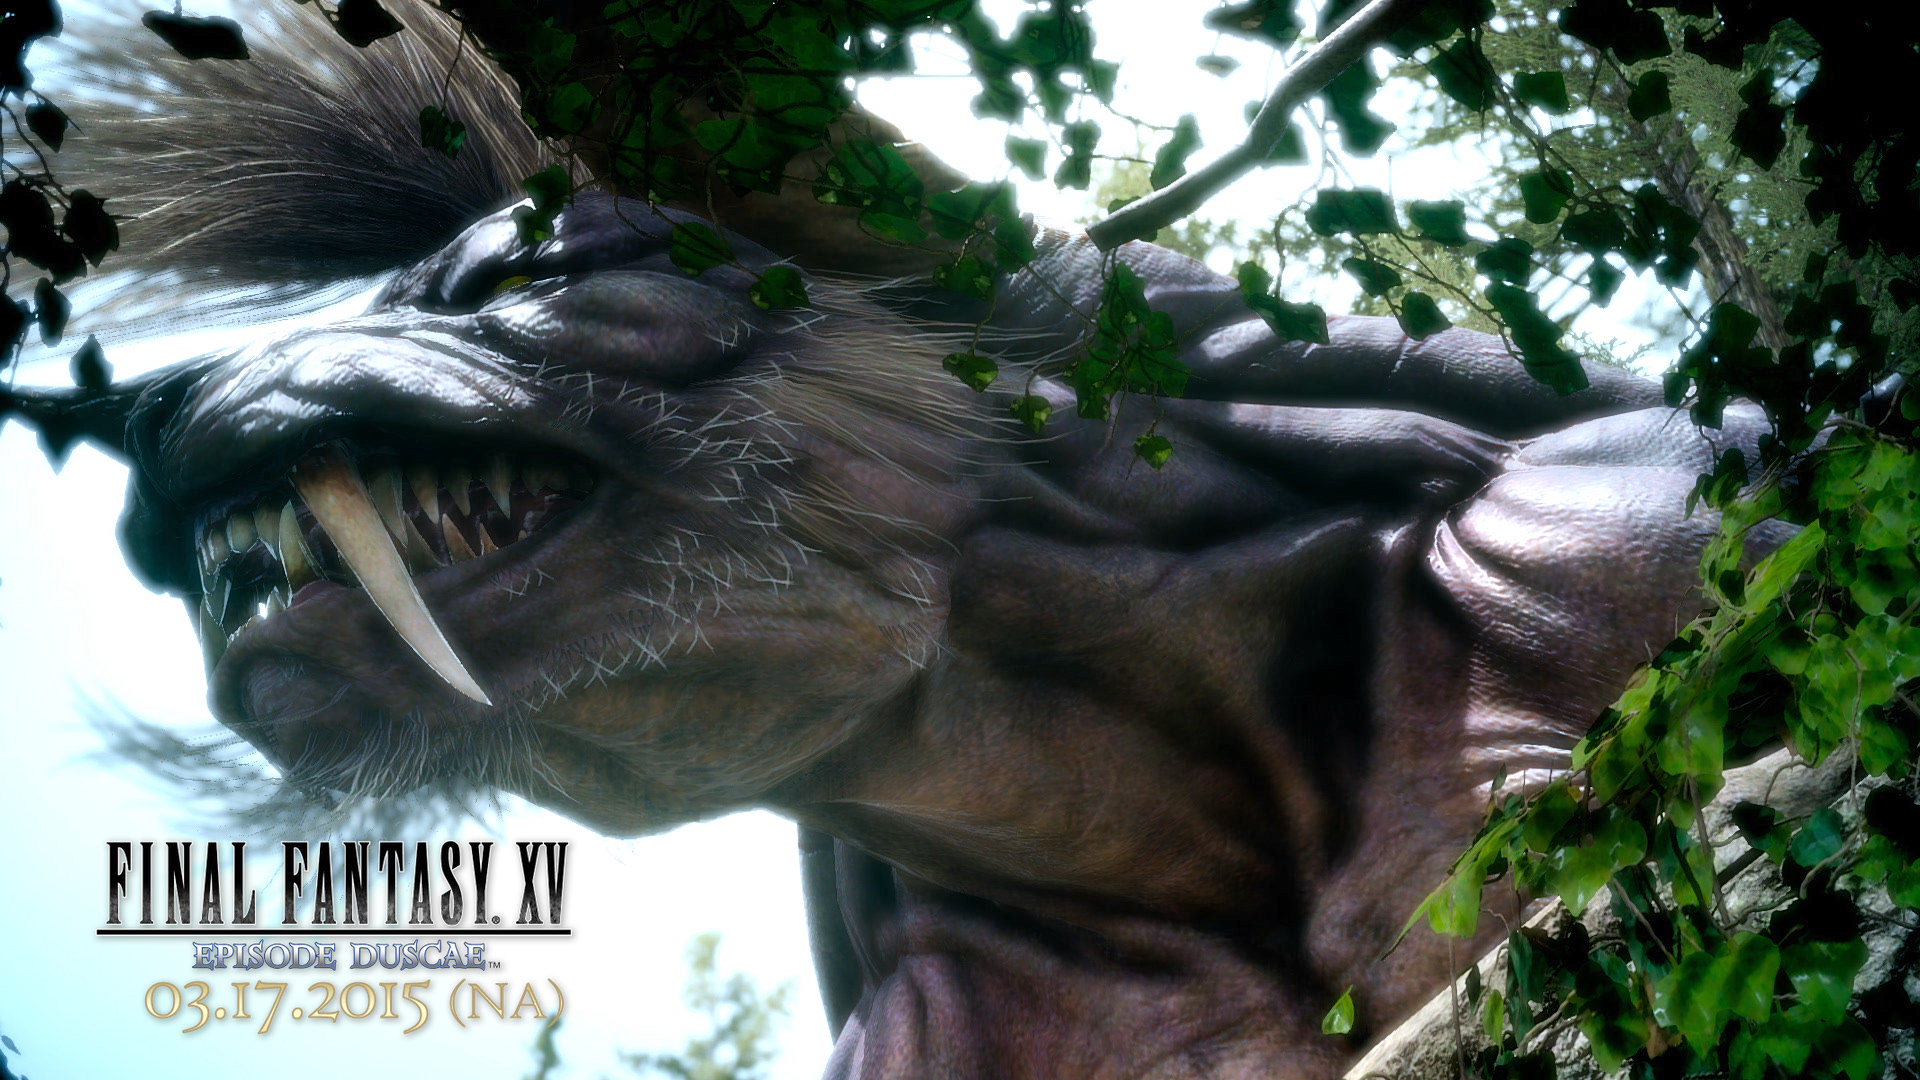 Final Fantasy XV Episode Duscae Screenshot